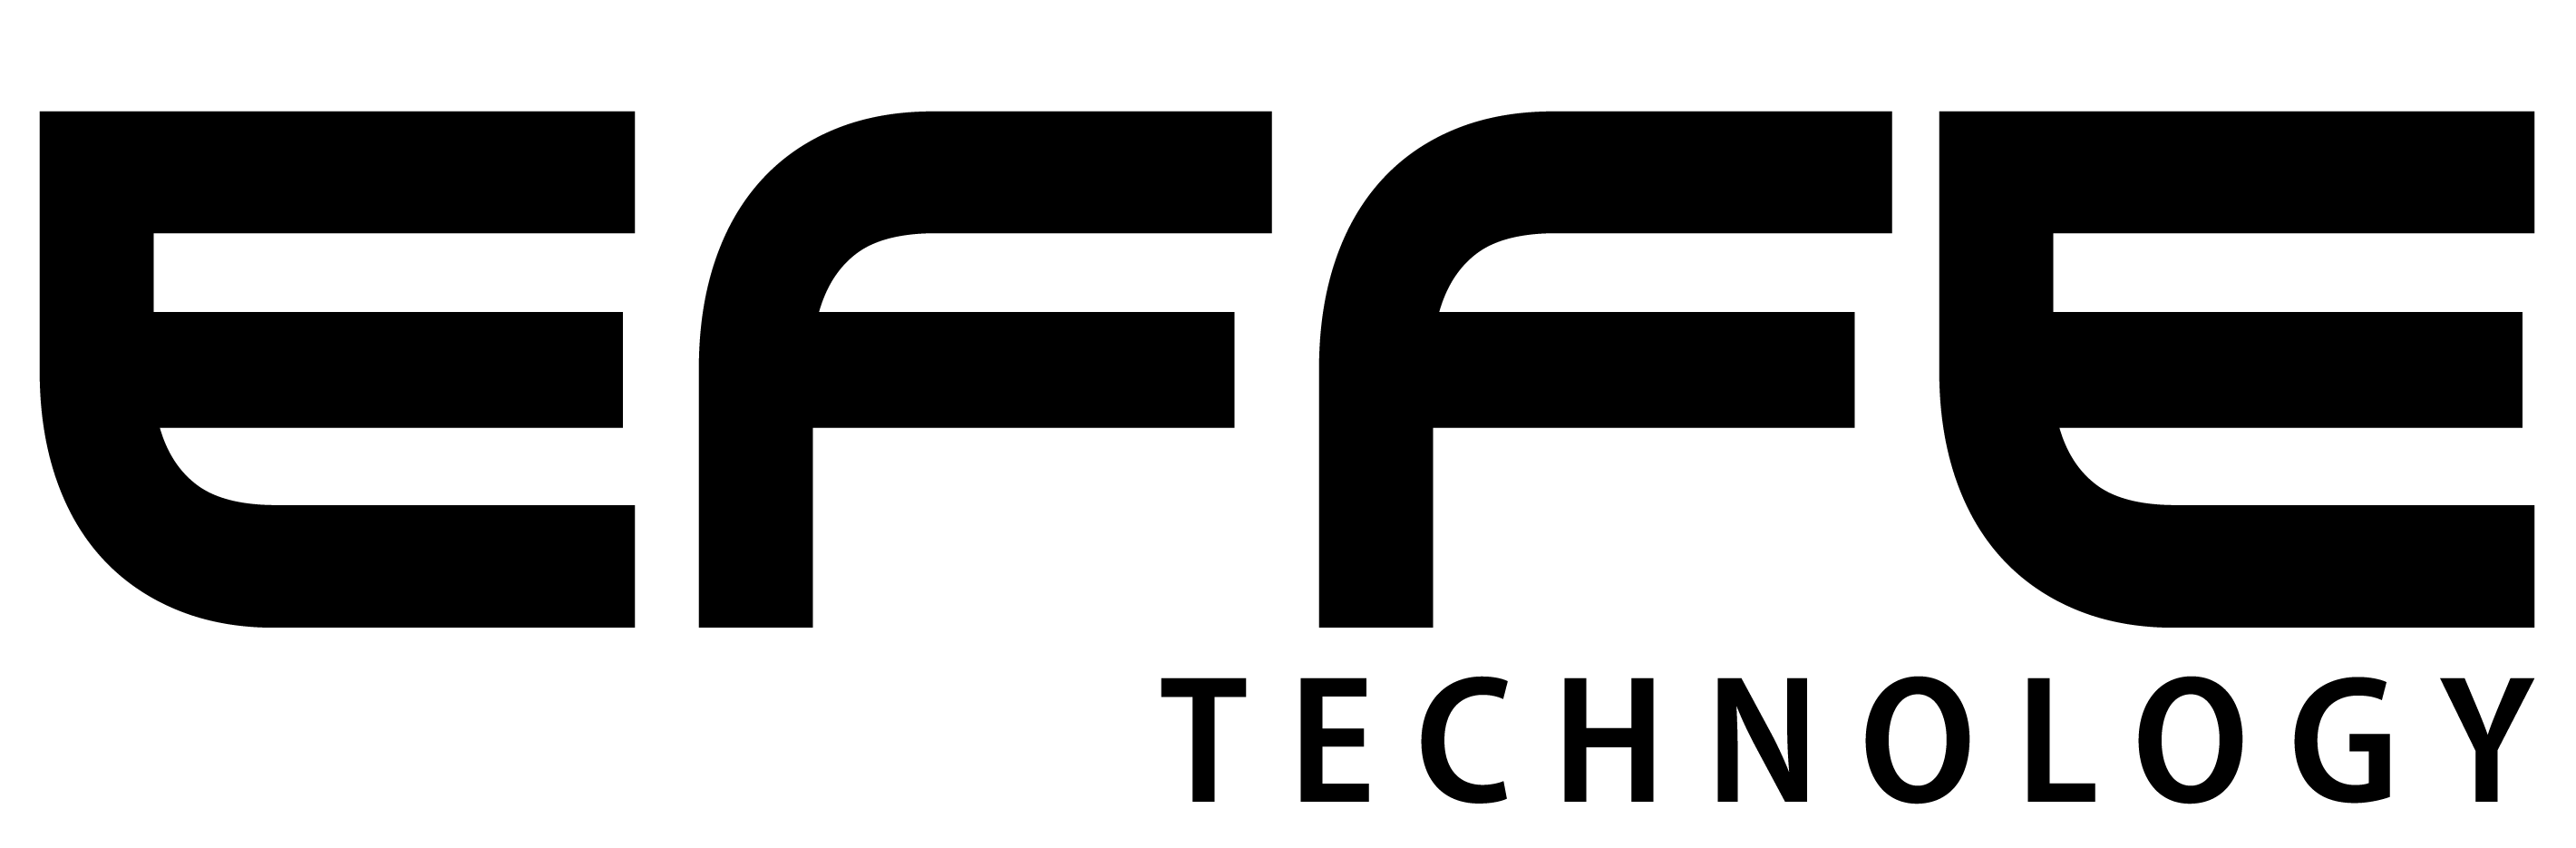 Effe Logo Technology Black